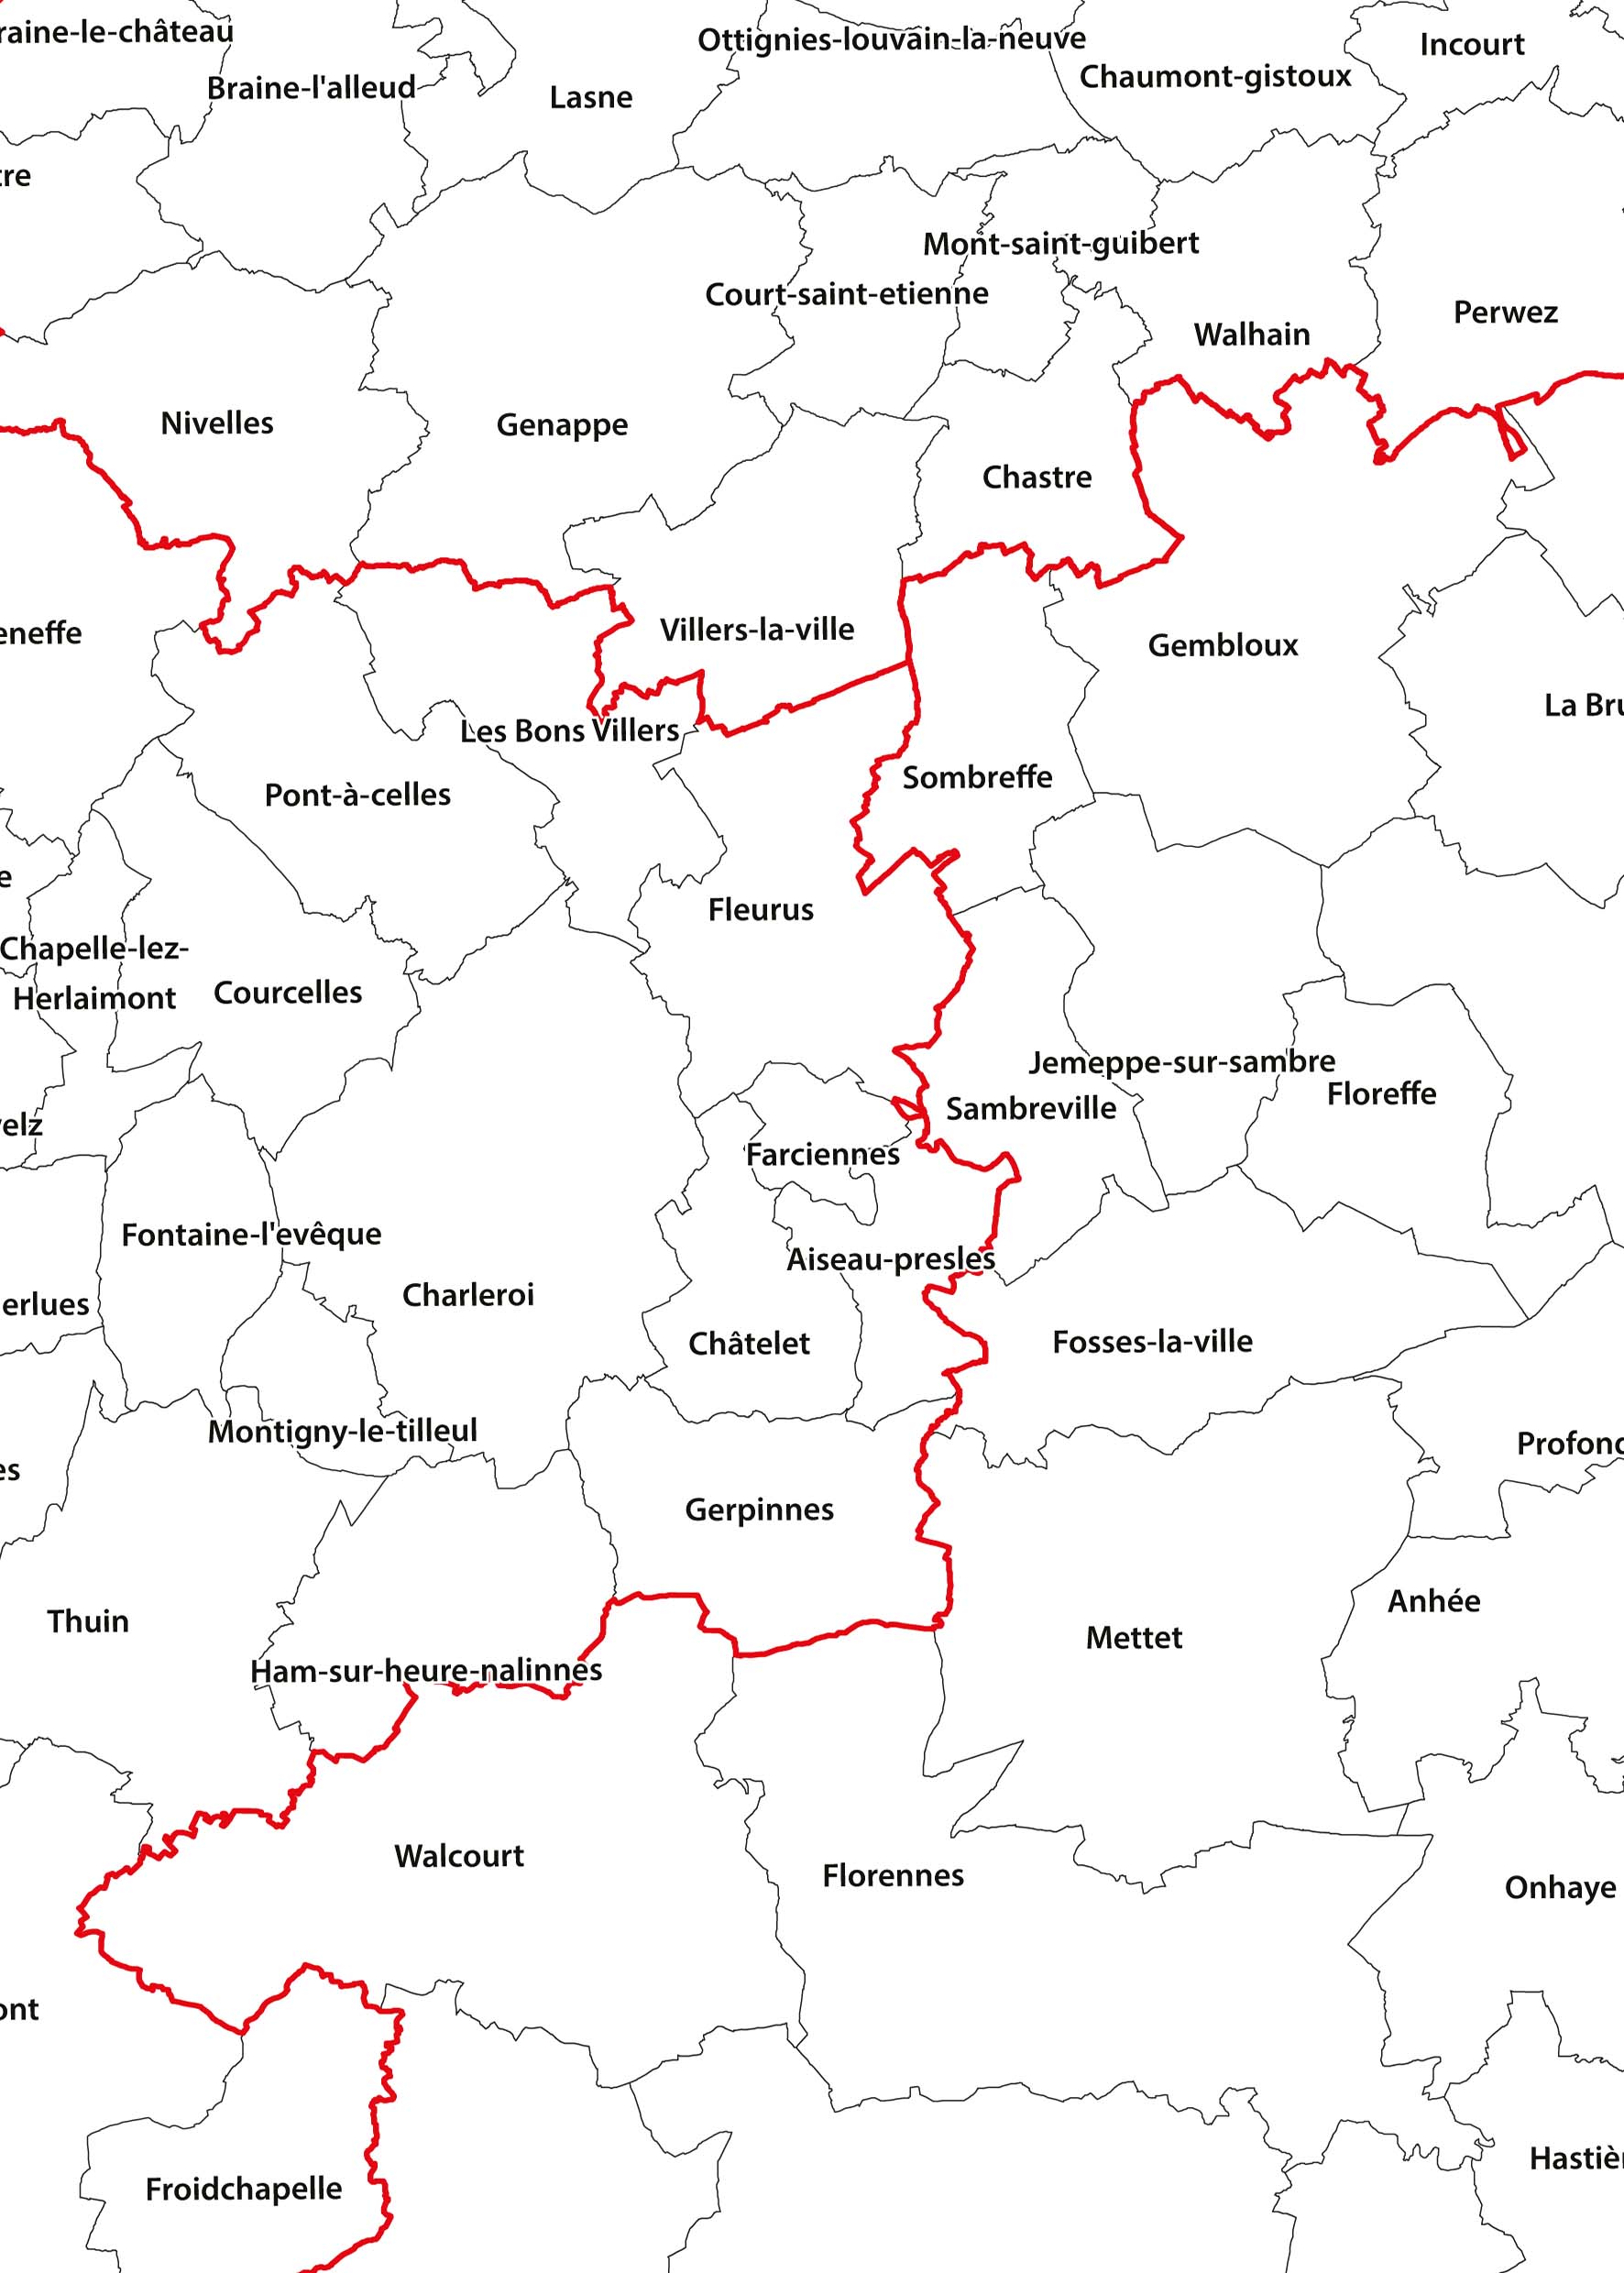 Digital Municipality Map Belgium 371 | The World of Maps.com